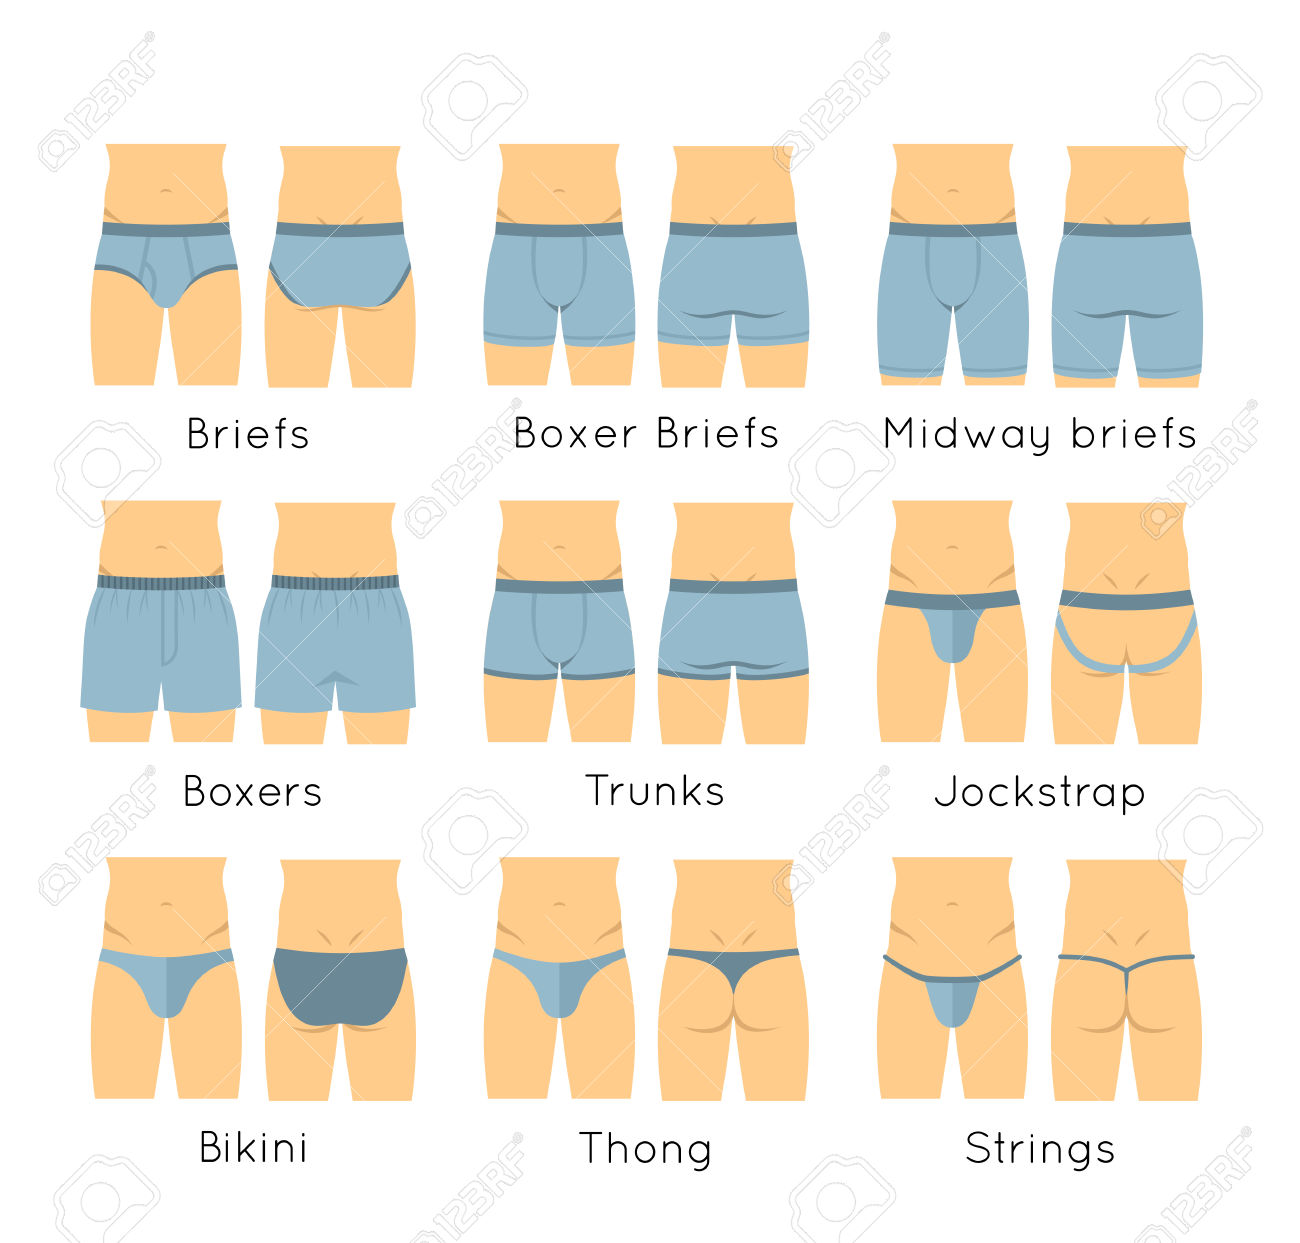 58596819-Male-underwear-types-flat-icons